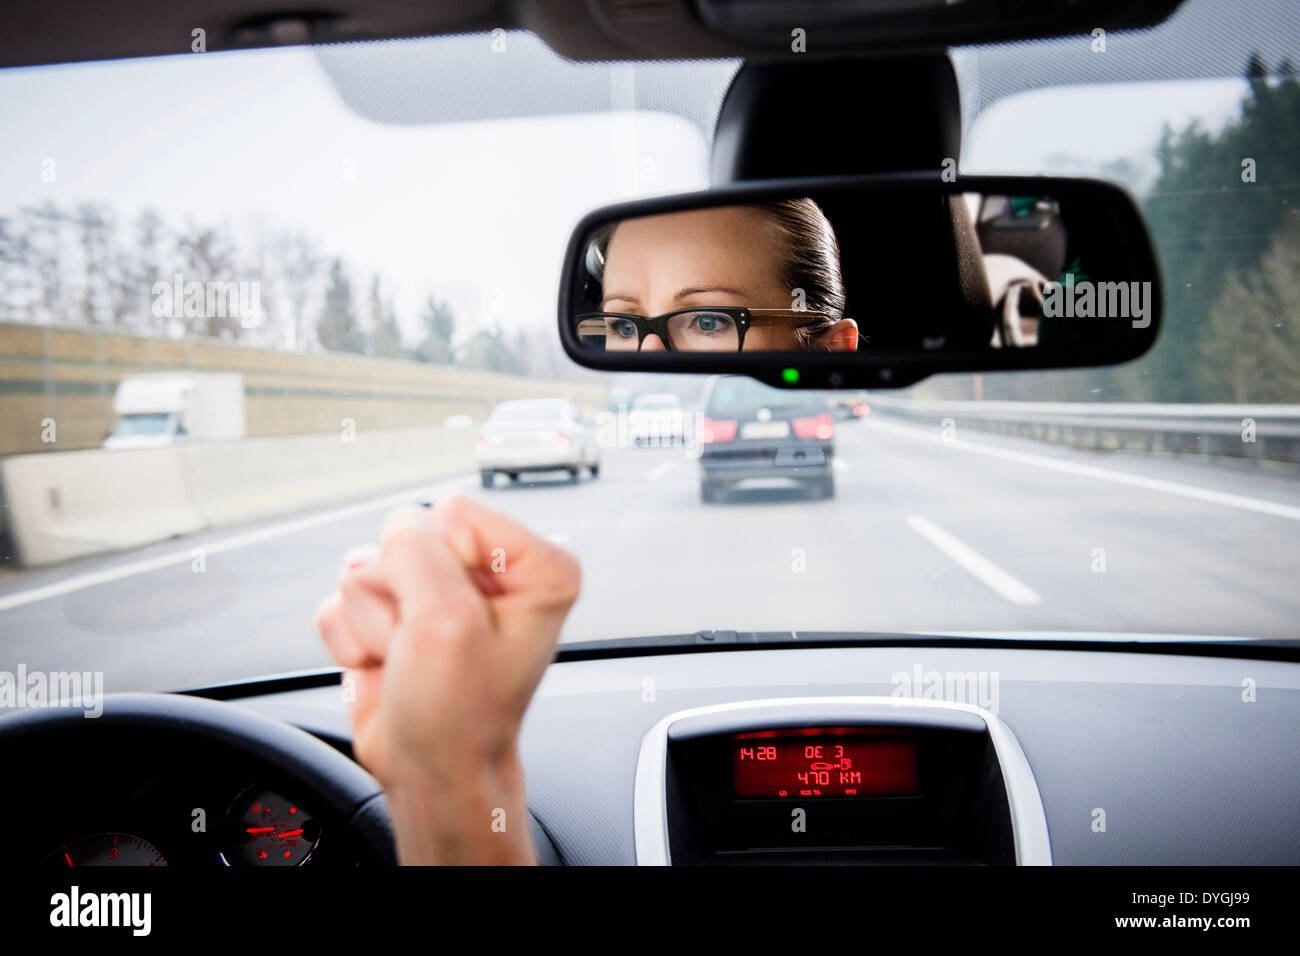 Frau ärgert sich während der Autofahrt - angry car driver Stock Photo